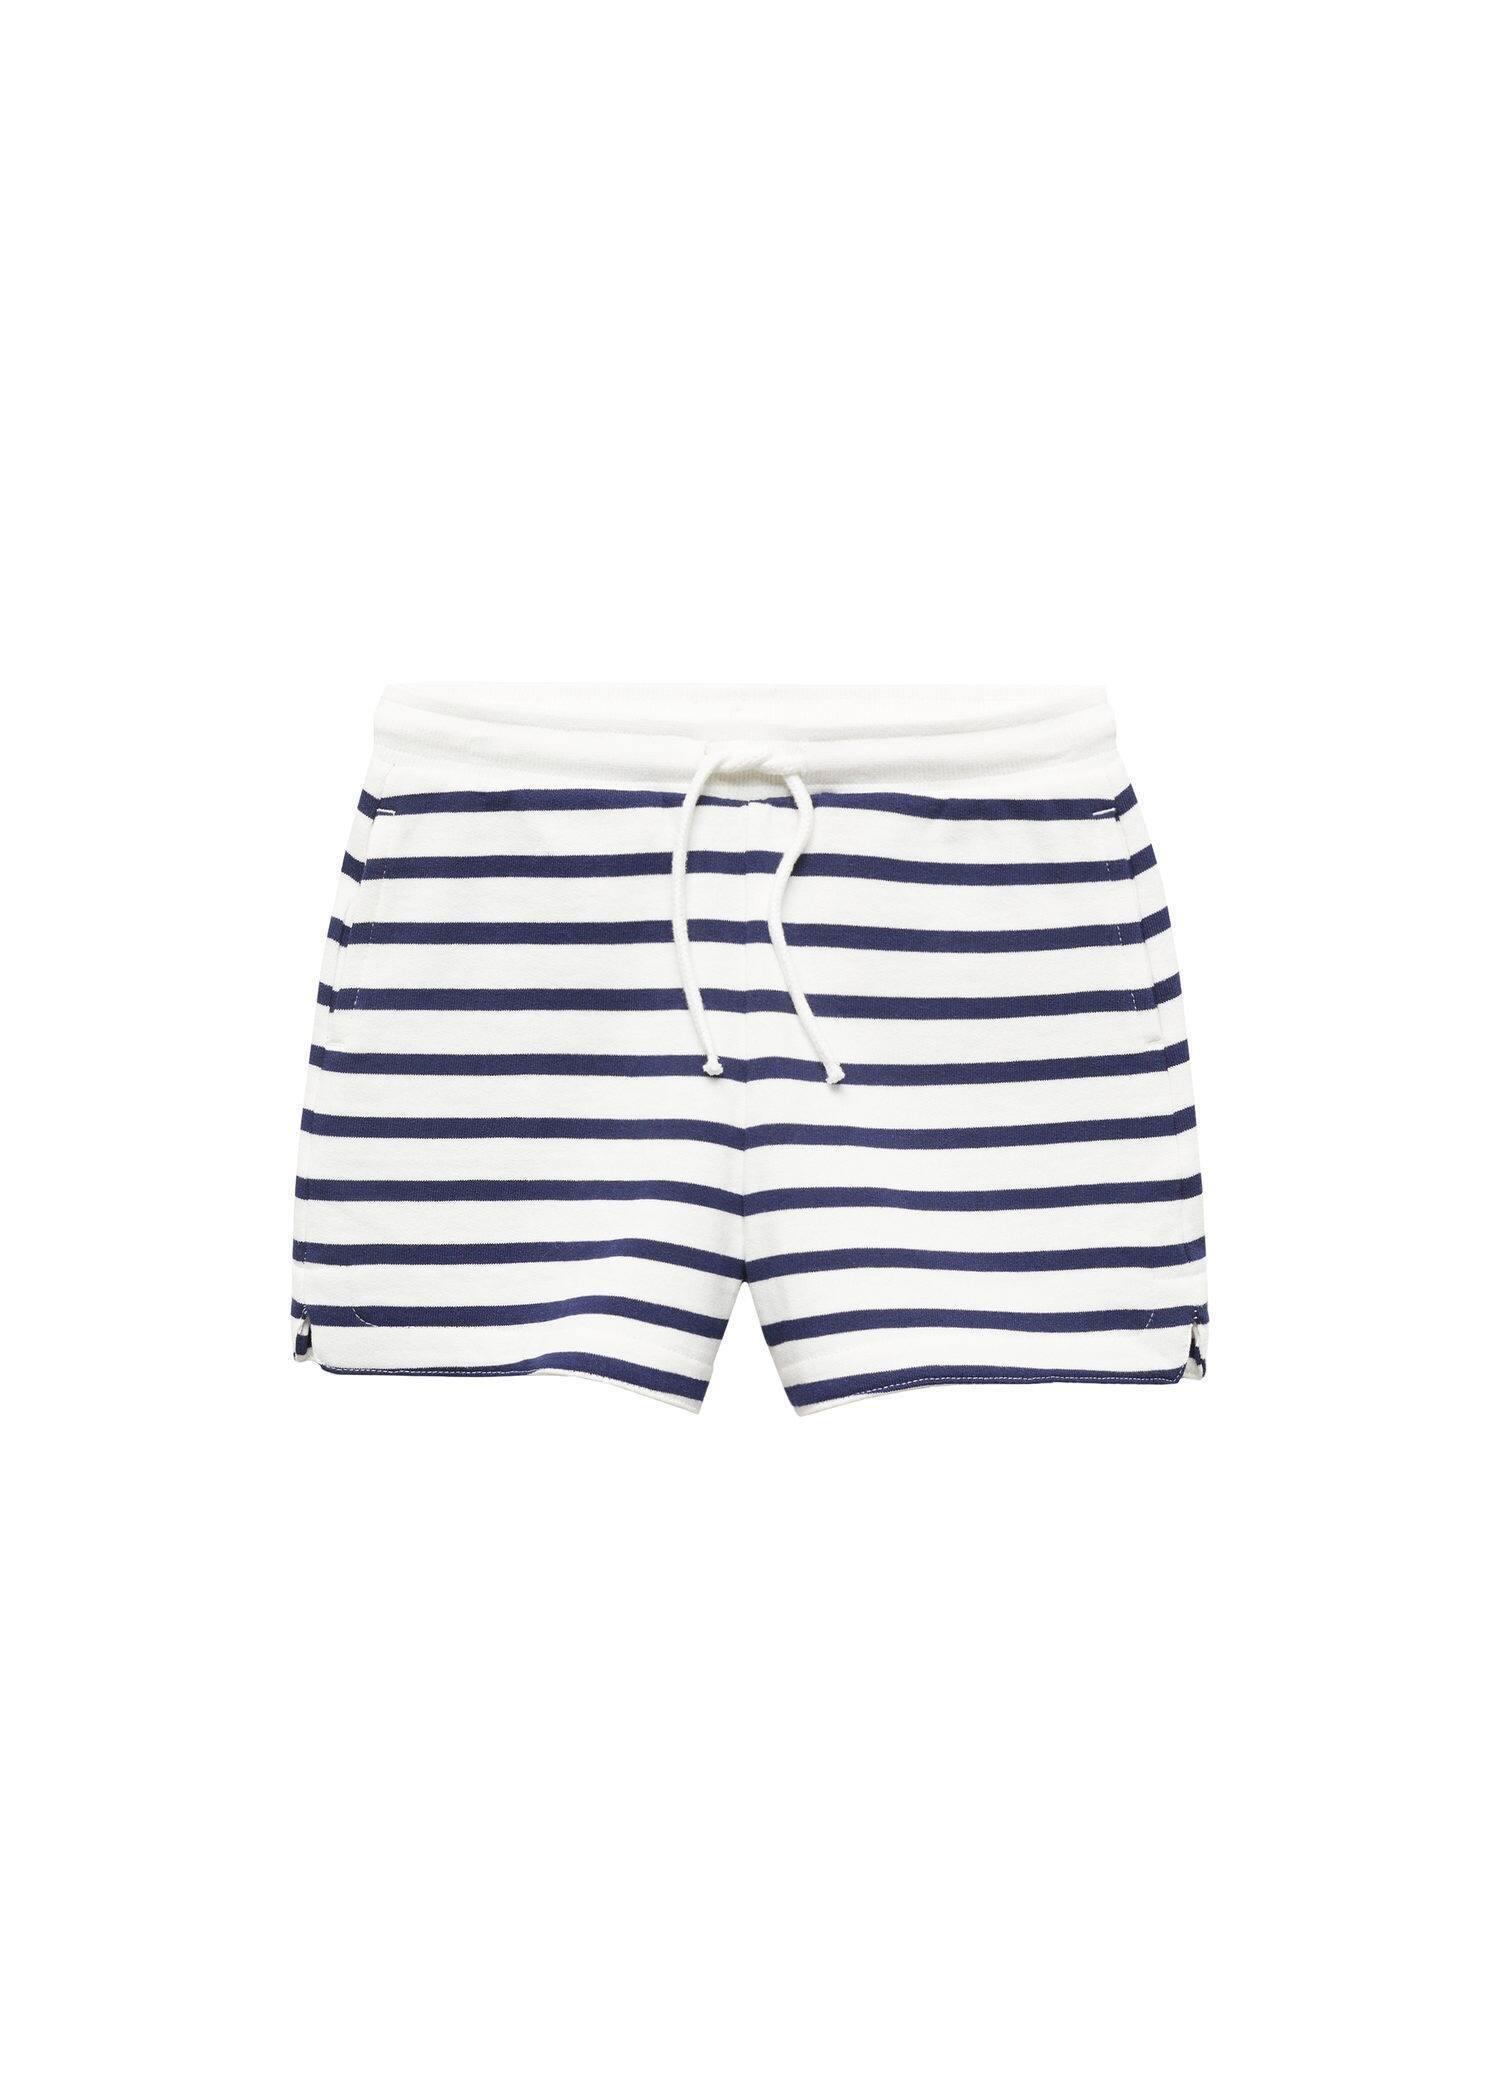 Mango - White Striped Cotton Shorts, Kids Girls